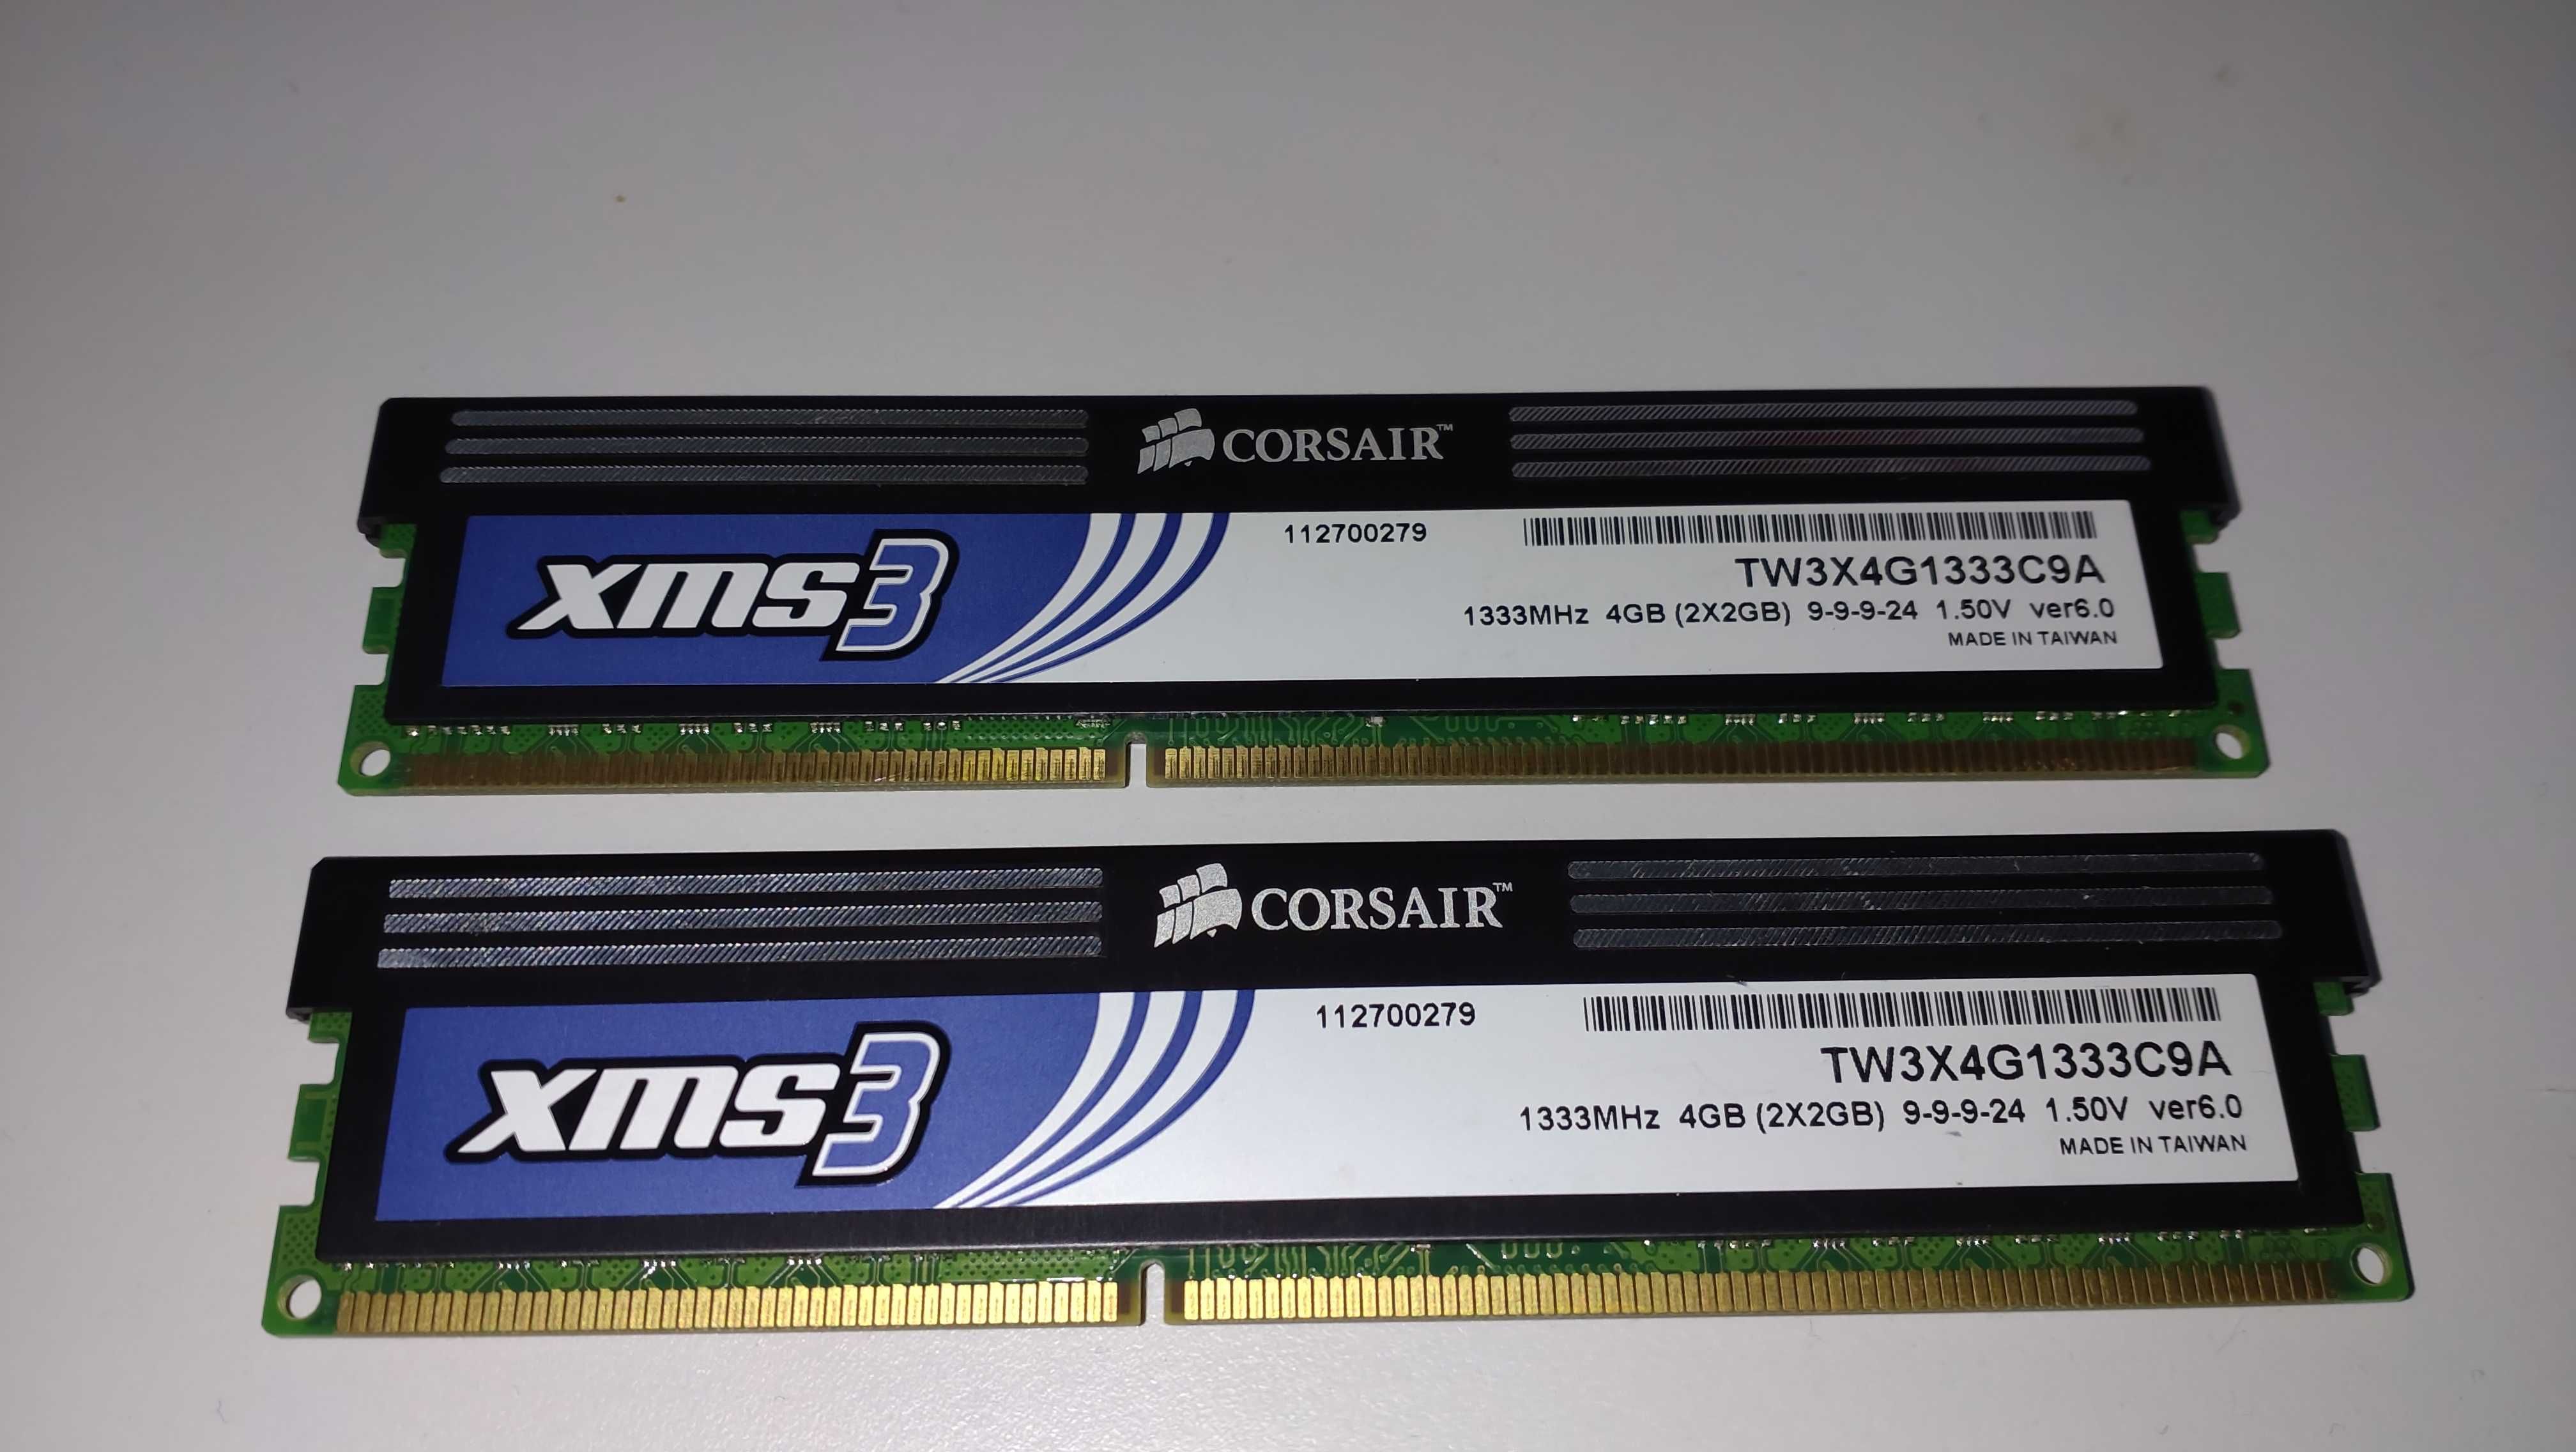 Ram Corsair XMS3 DDR 4GB (2X2GB) Dual kit